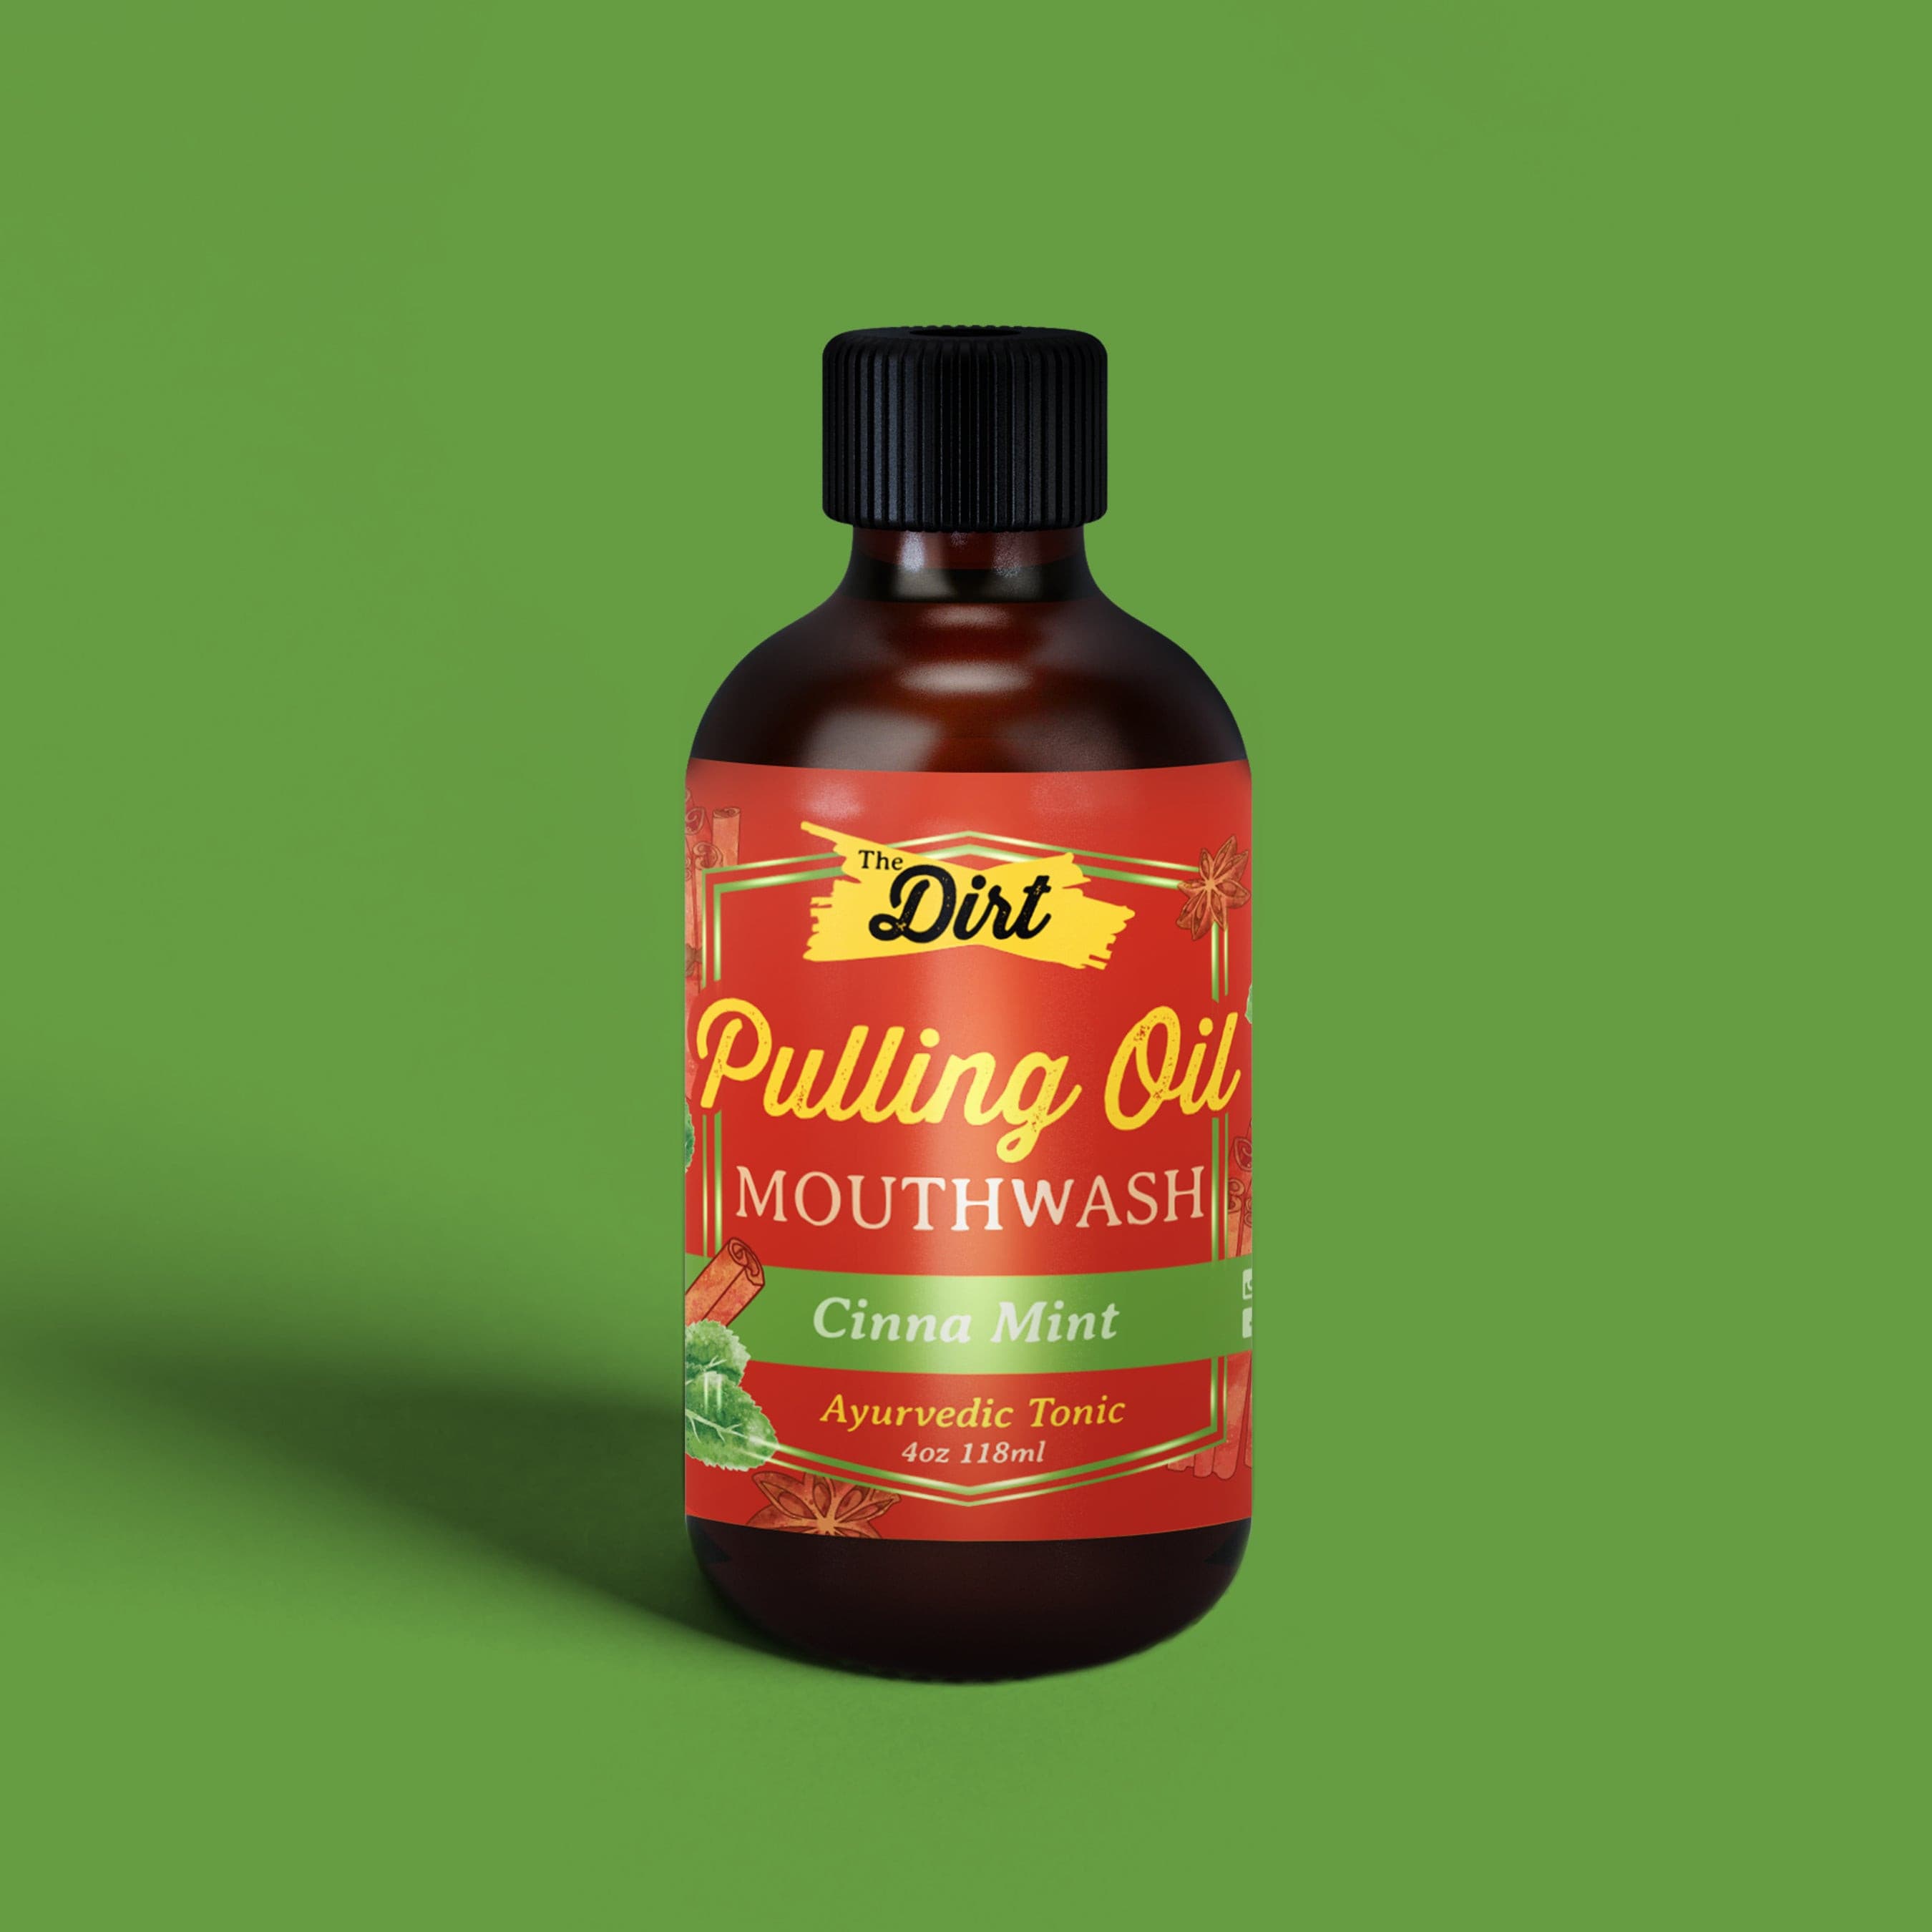 Pulling Oil Mouthwash - The Dirt - Super Natural Oral Care 4oz / Cinna-mint Oral Care